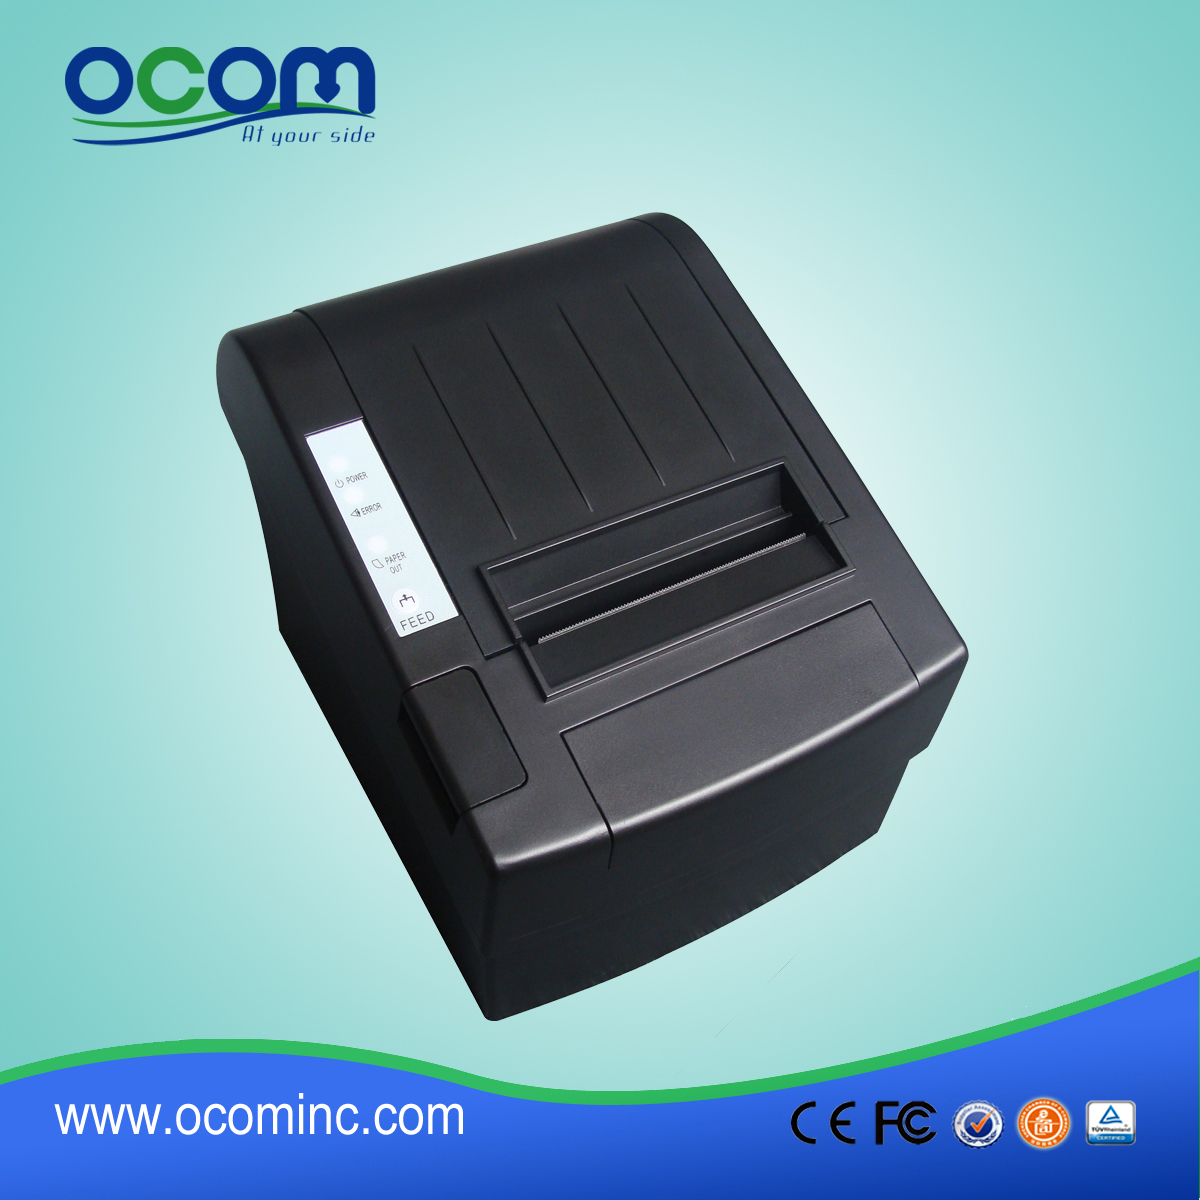 OCPP-806-URL: 300mm Vitesse / s haut Impression 3 Interfaces 80mm Thermal Receipt Printer